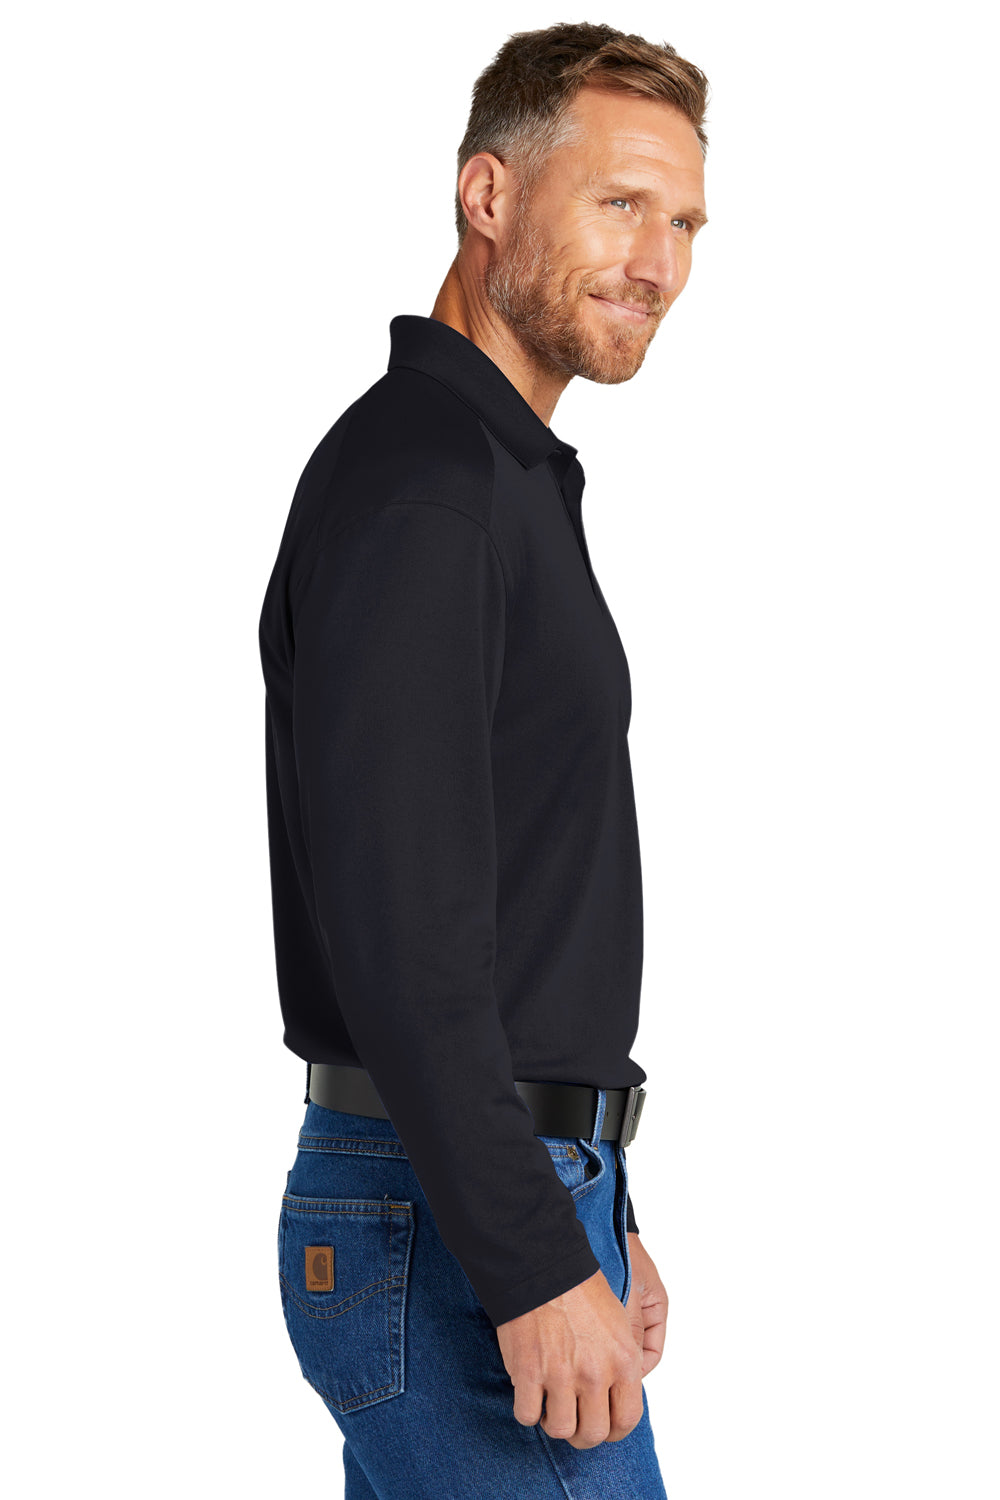 CornerStone CS418LS Select Long Sleeve Polo Shirt Dark Navy Blue Side